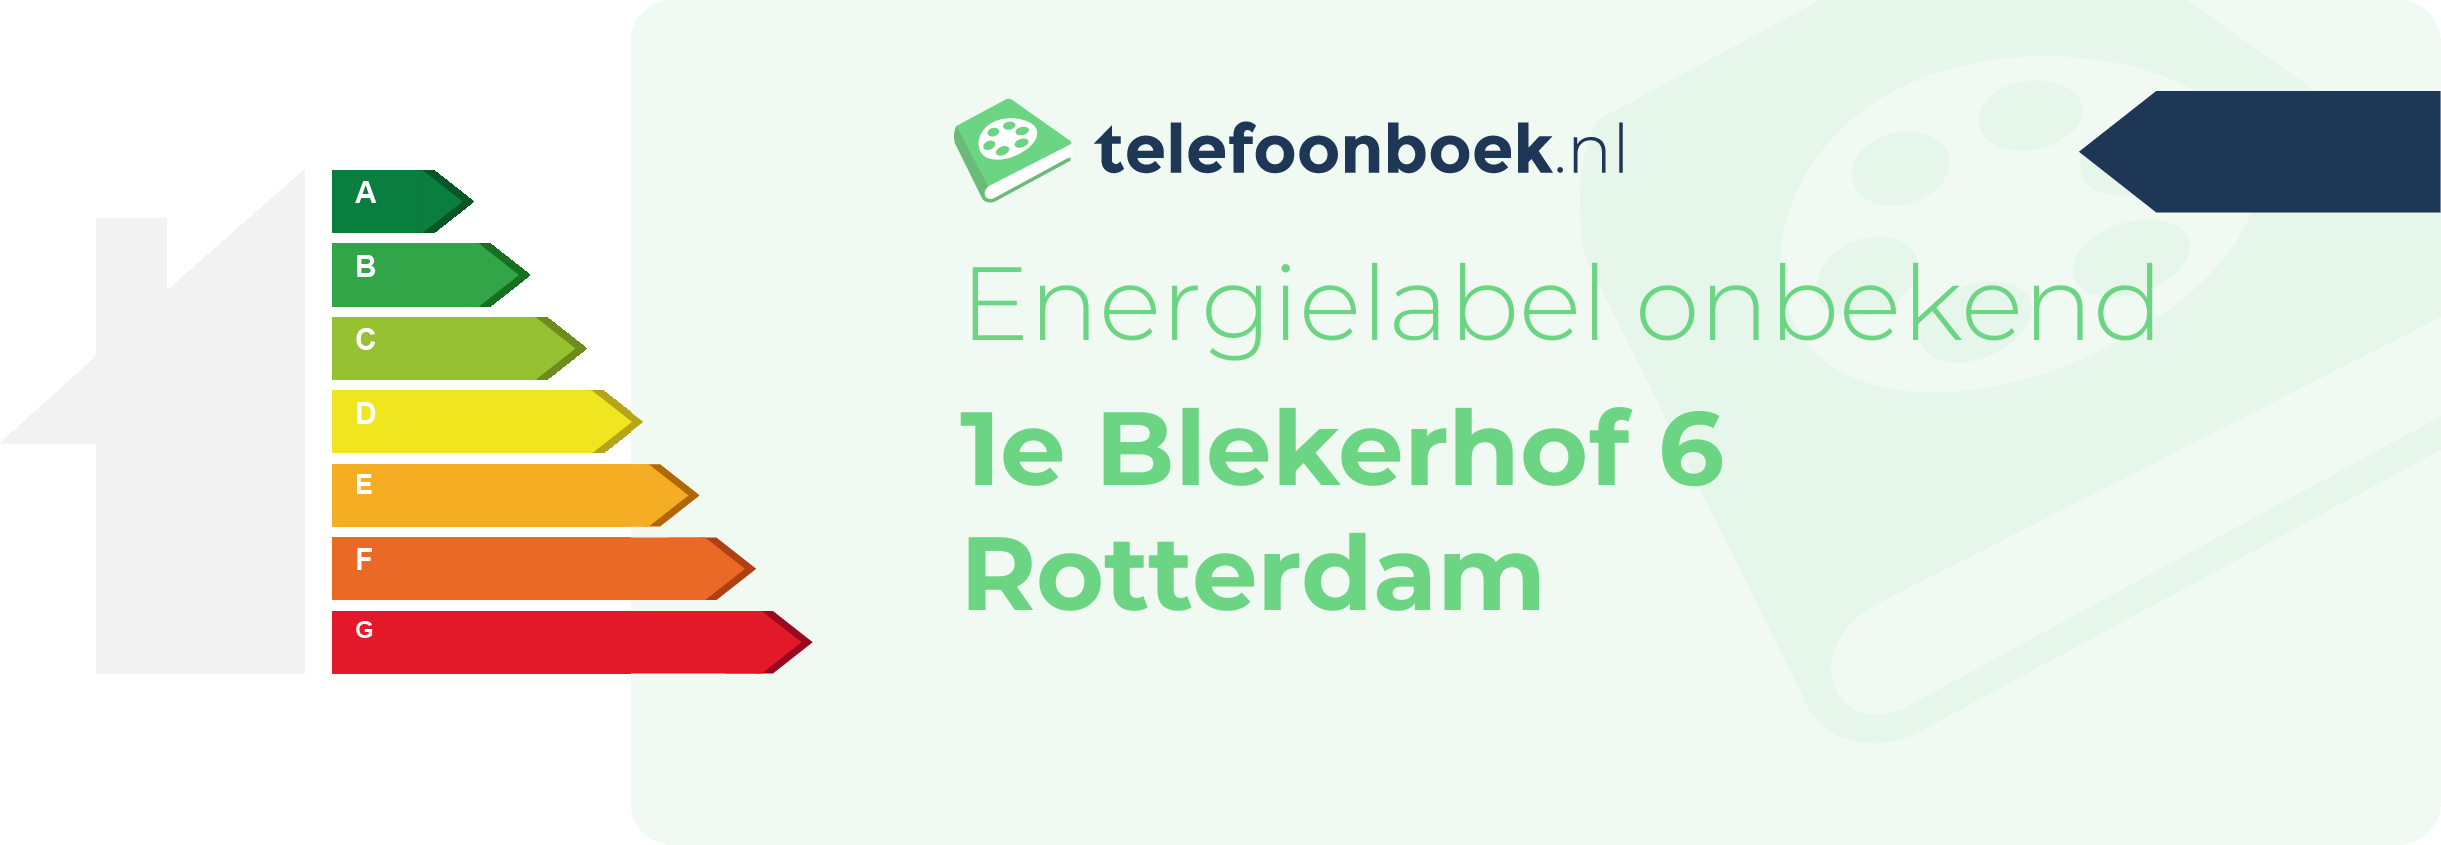 Energielabel 1e Blekerhof 6 Rotterdam